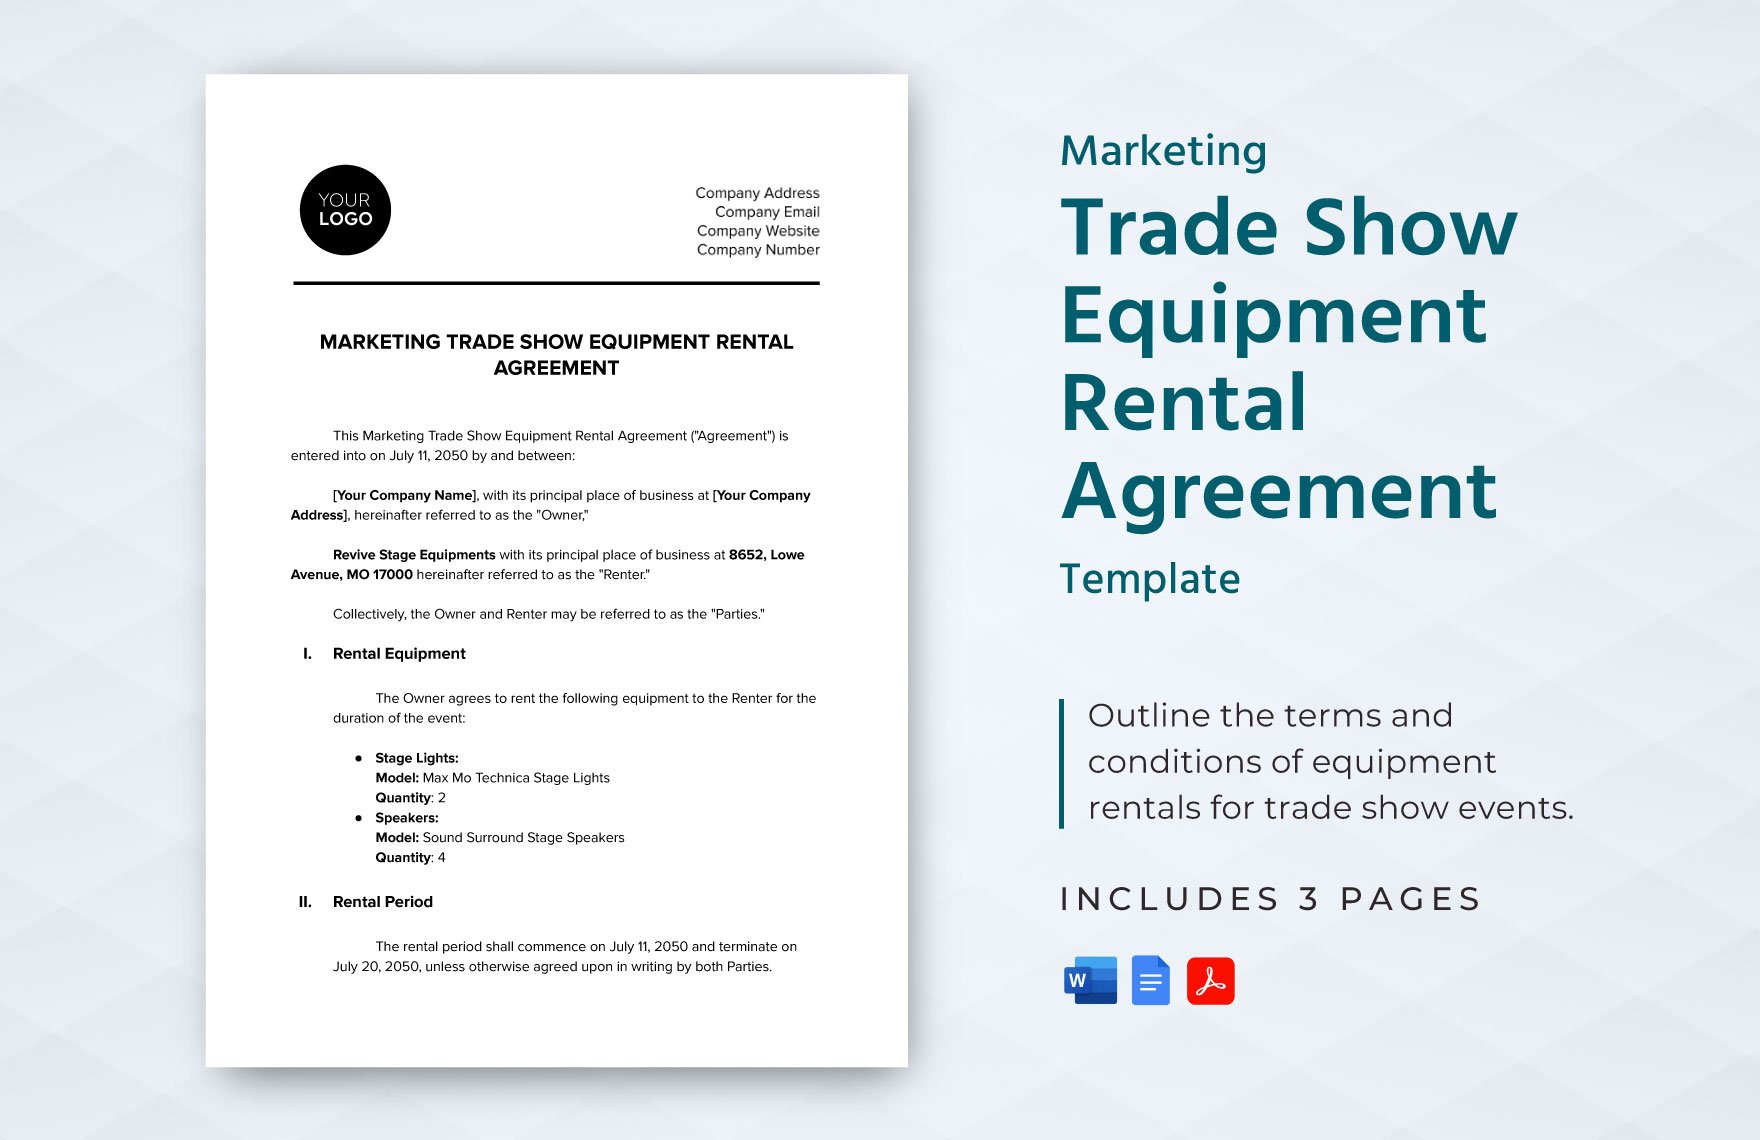 Marketing Trade Show Equipment Rental Agreement Template in Word, Google Docs, PDF